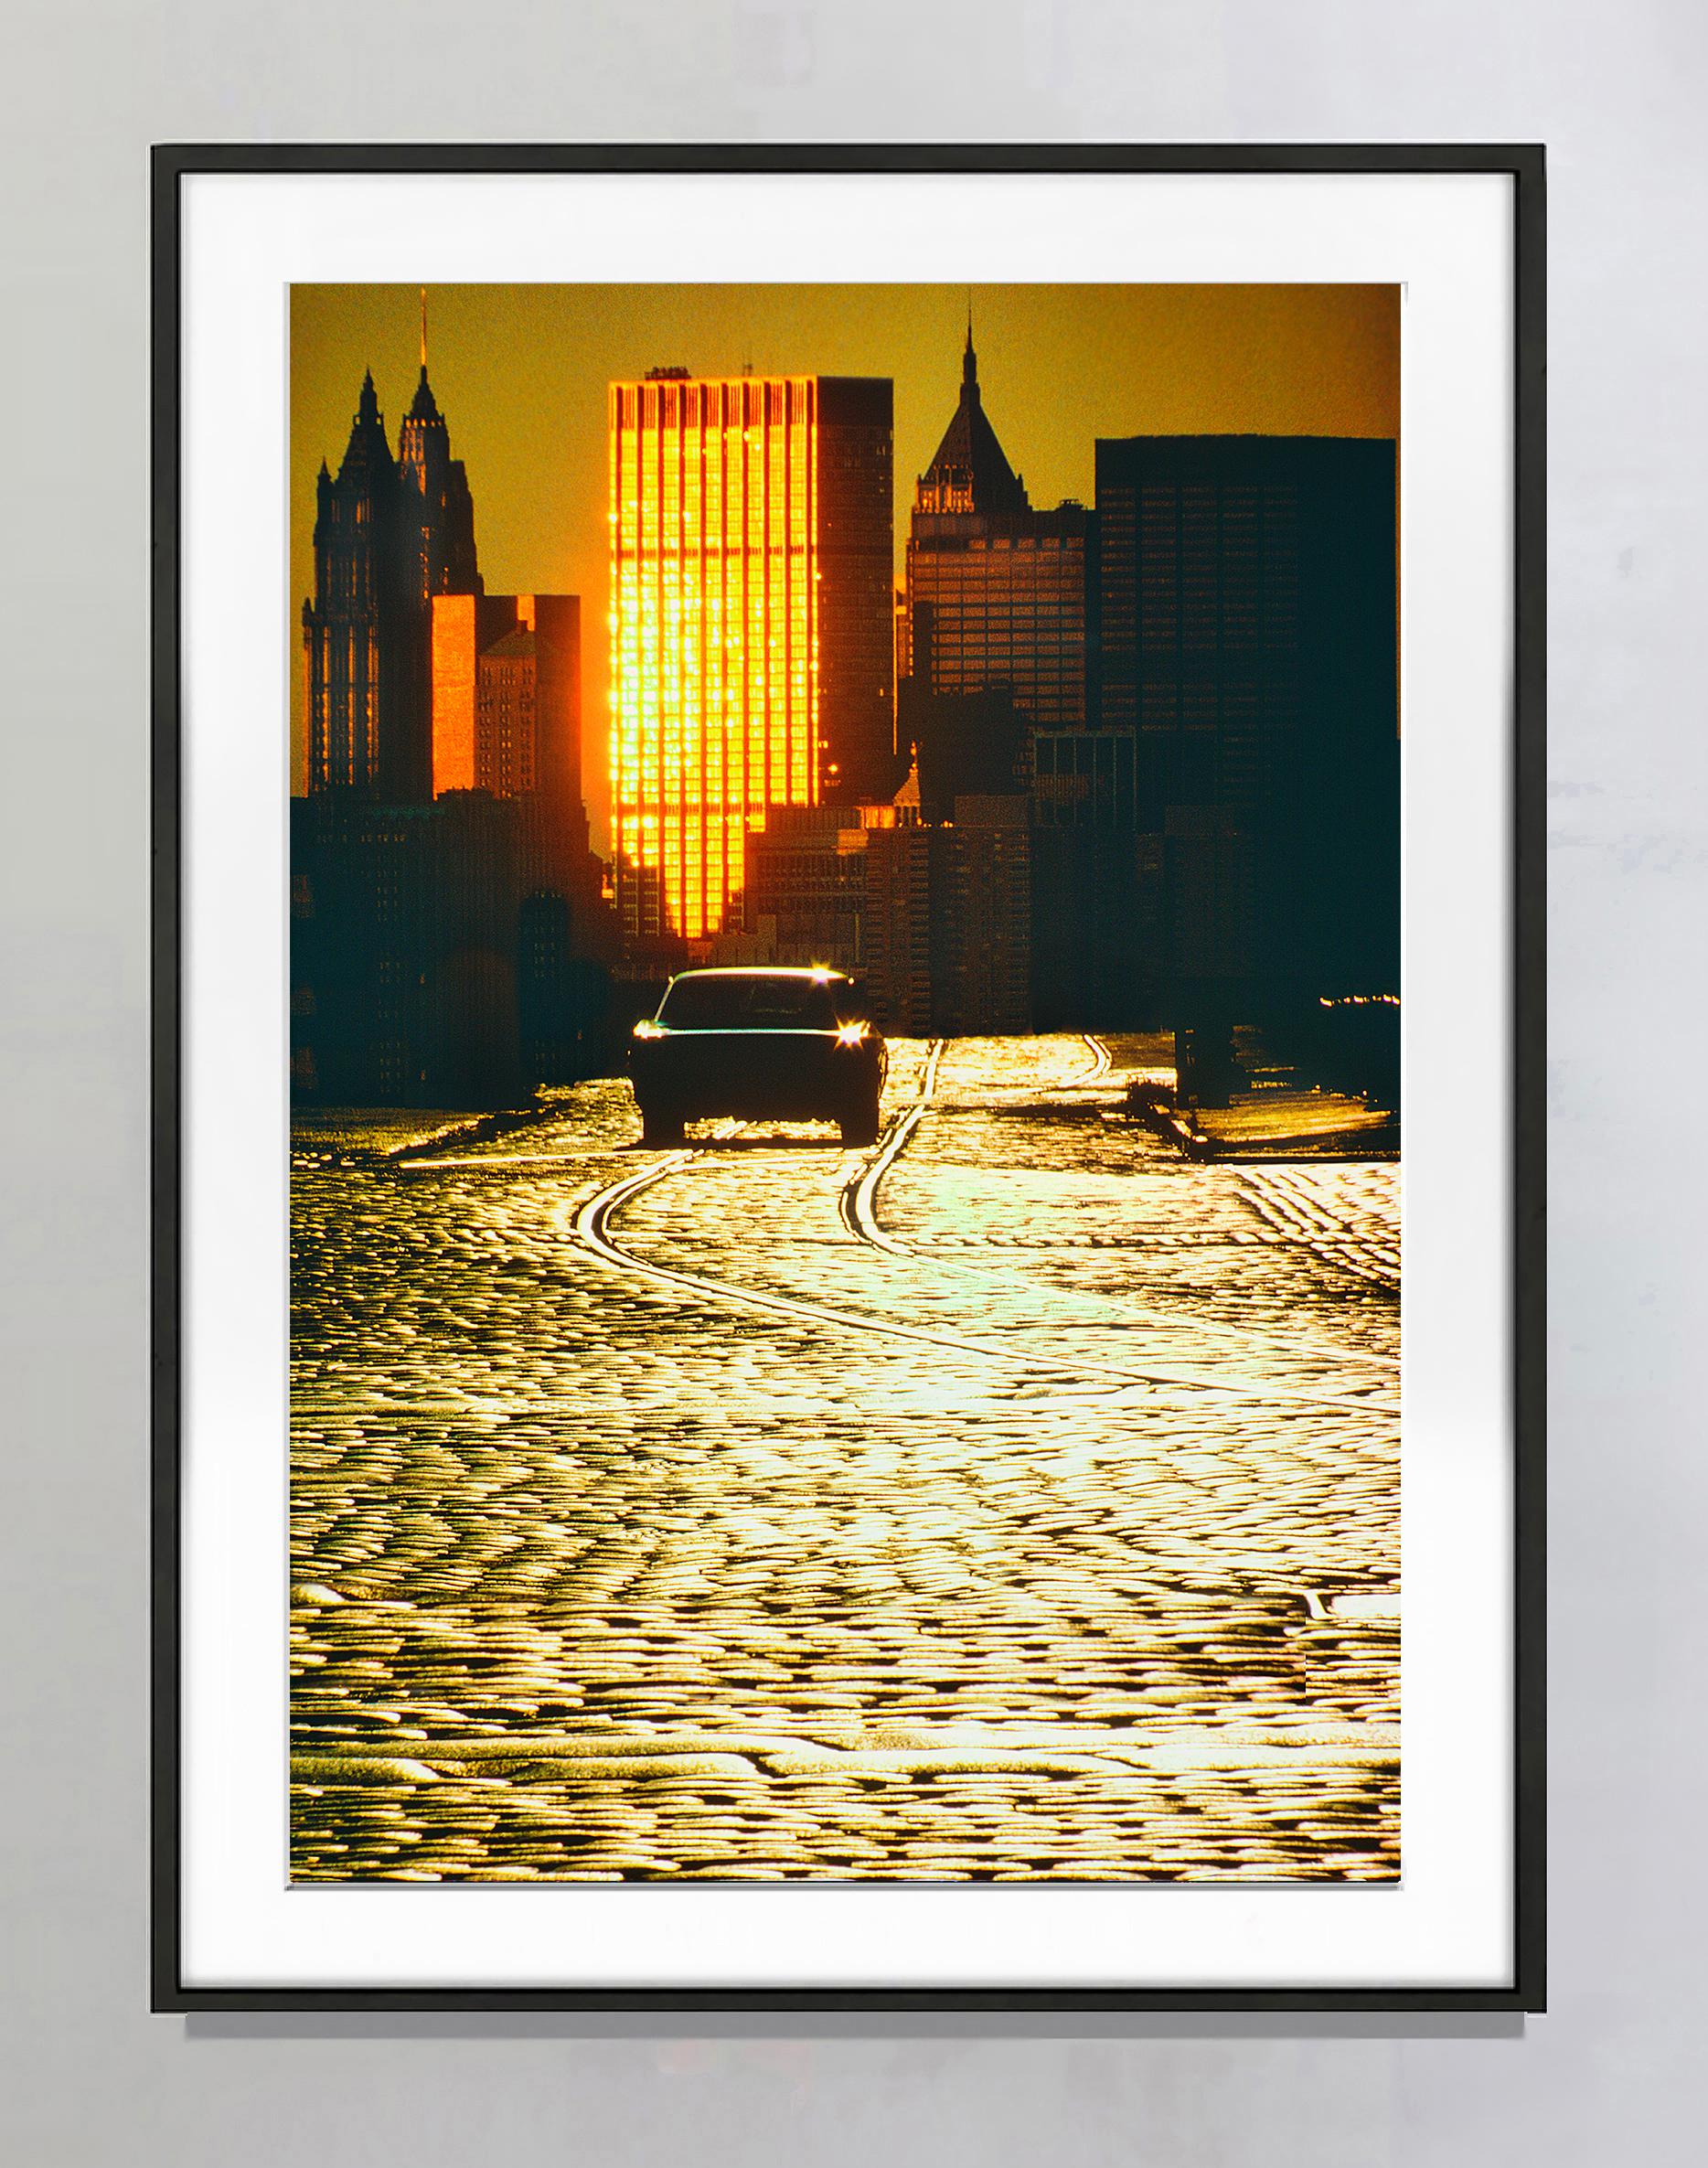 Cobblestone Road to Lower Manhattan Skyline in Golden Light  - Post-Impressionist Photograph by Mitchell Funk